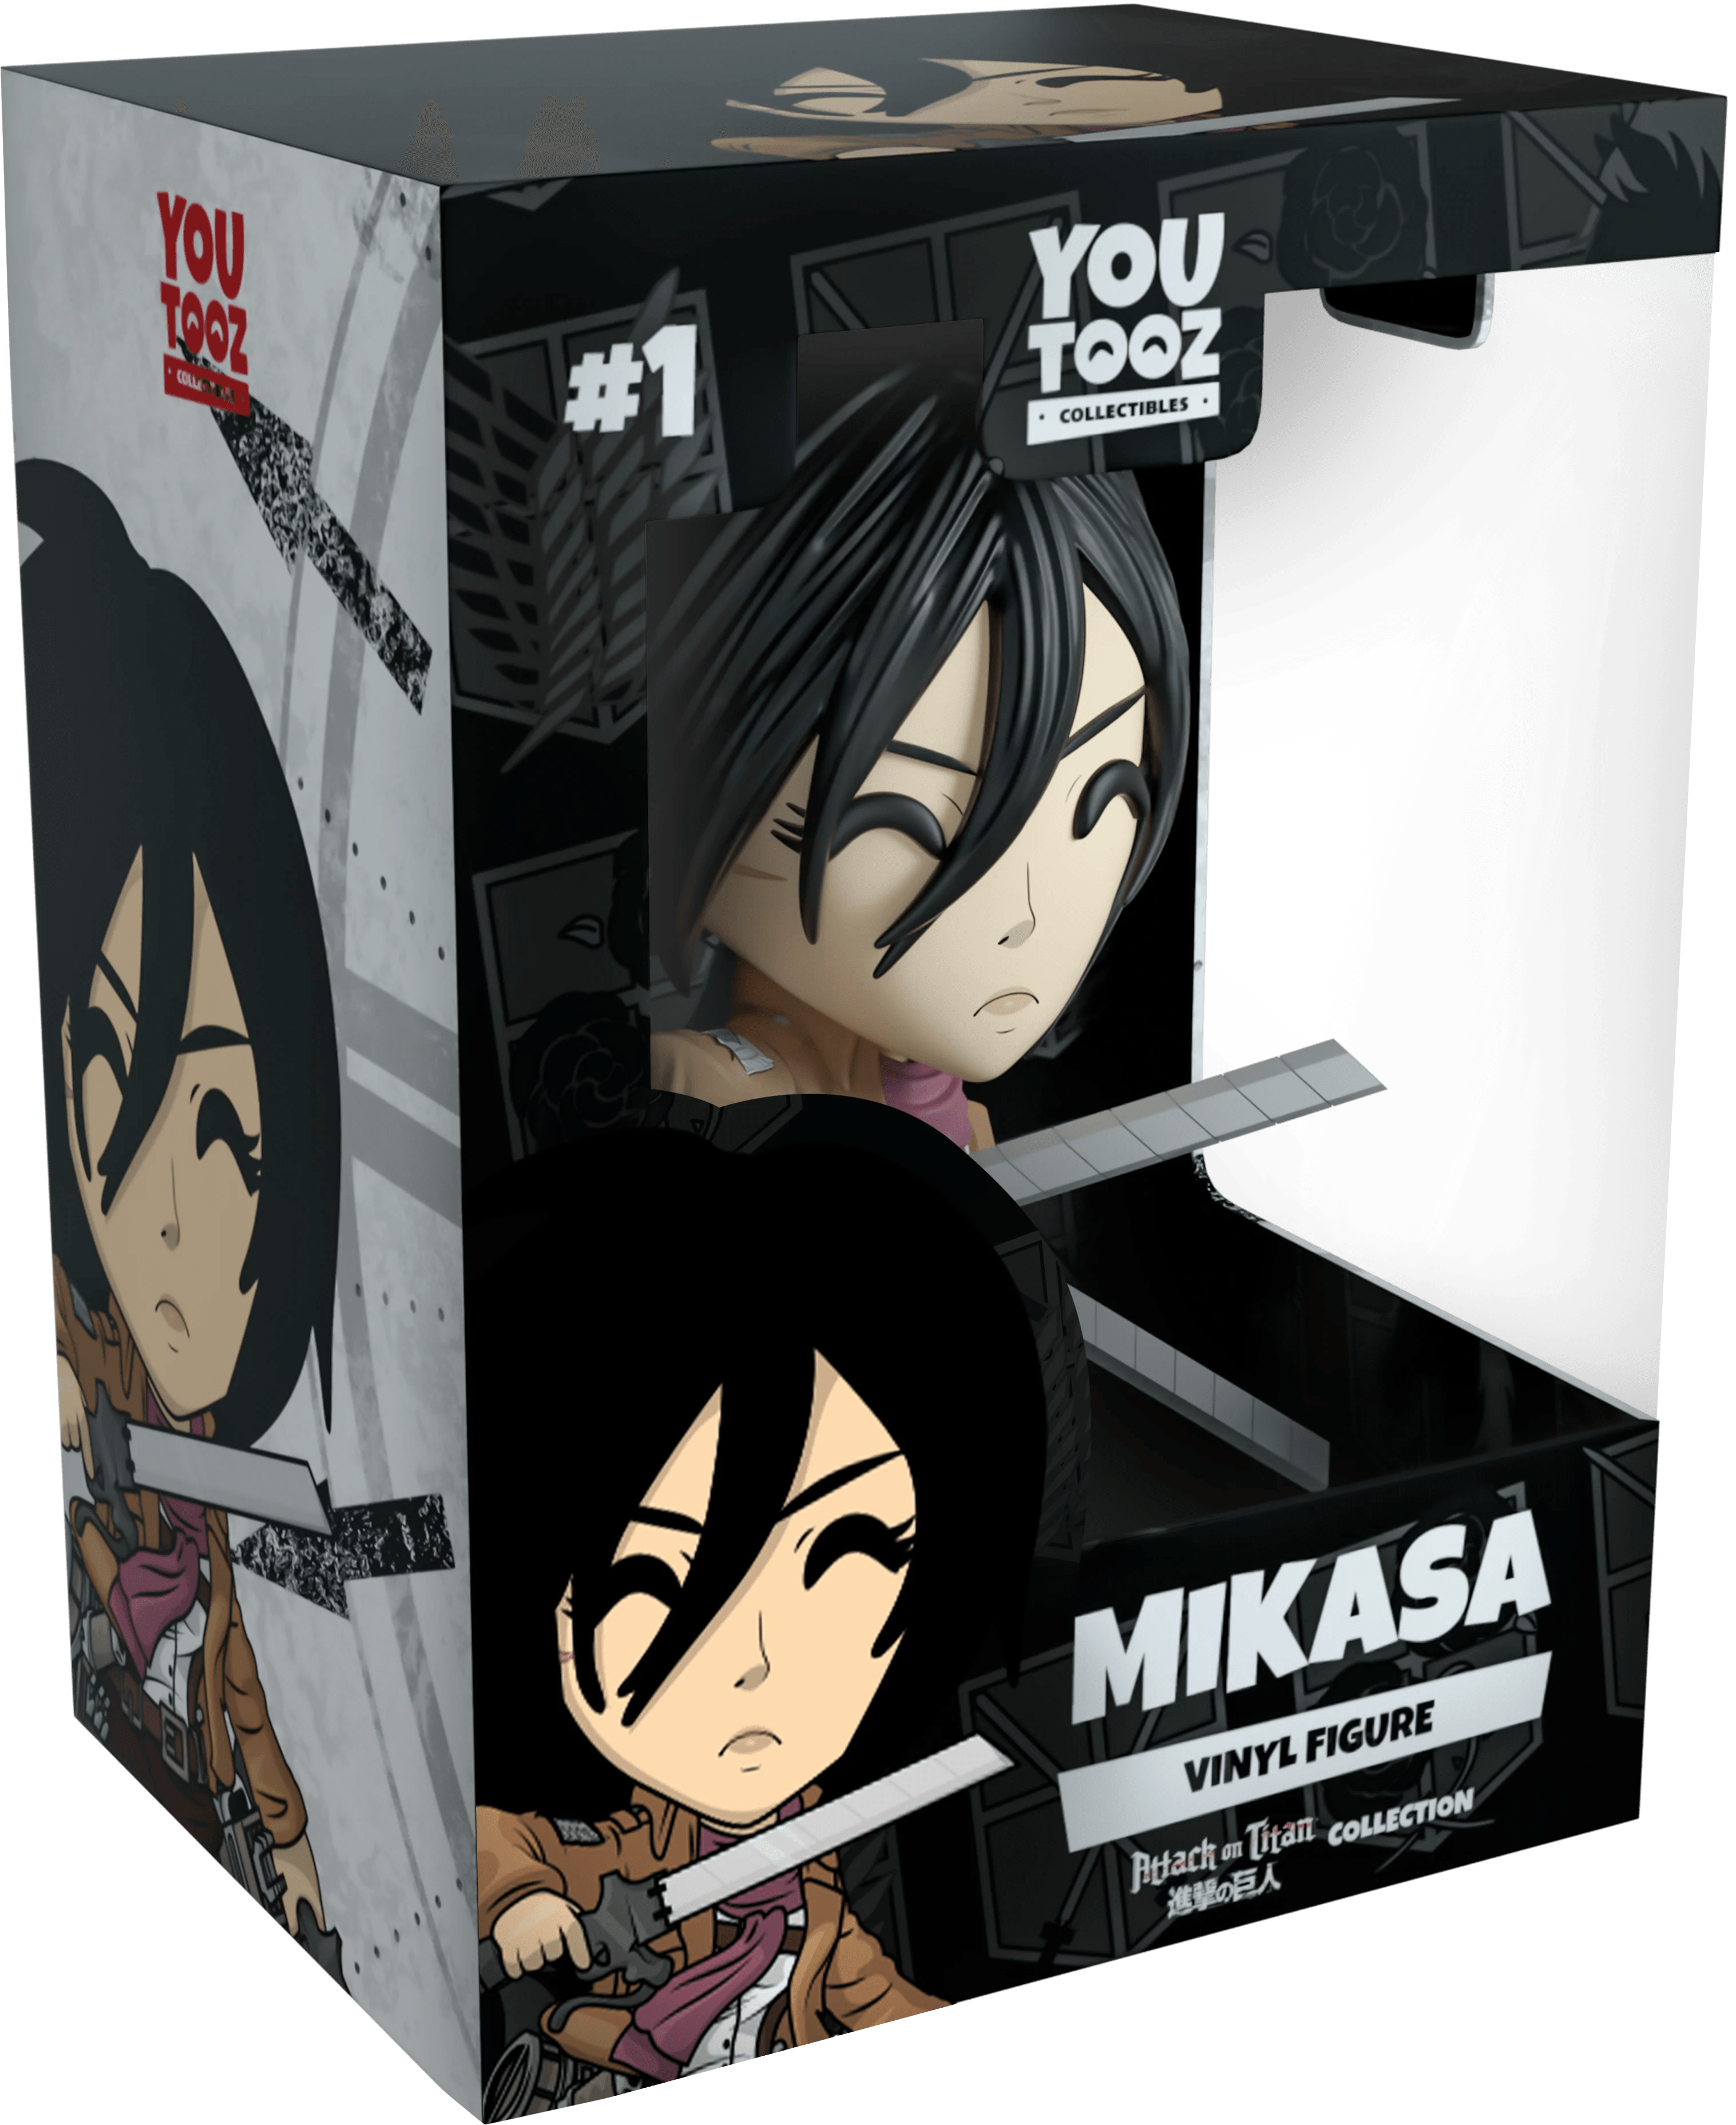 Youtooz - Attack on Titan - Mikasa Vinyl Figure #1 - The Card Vault